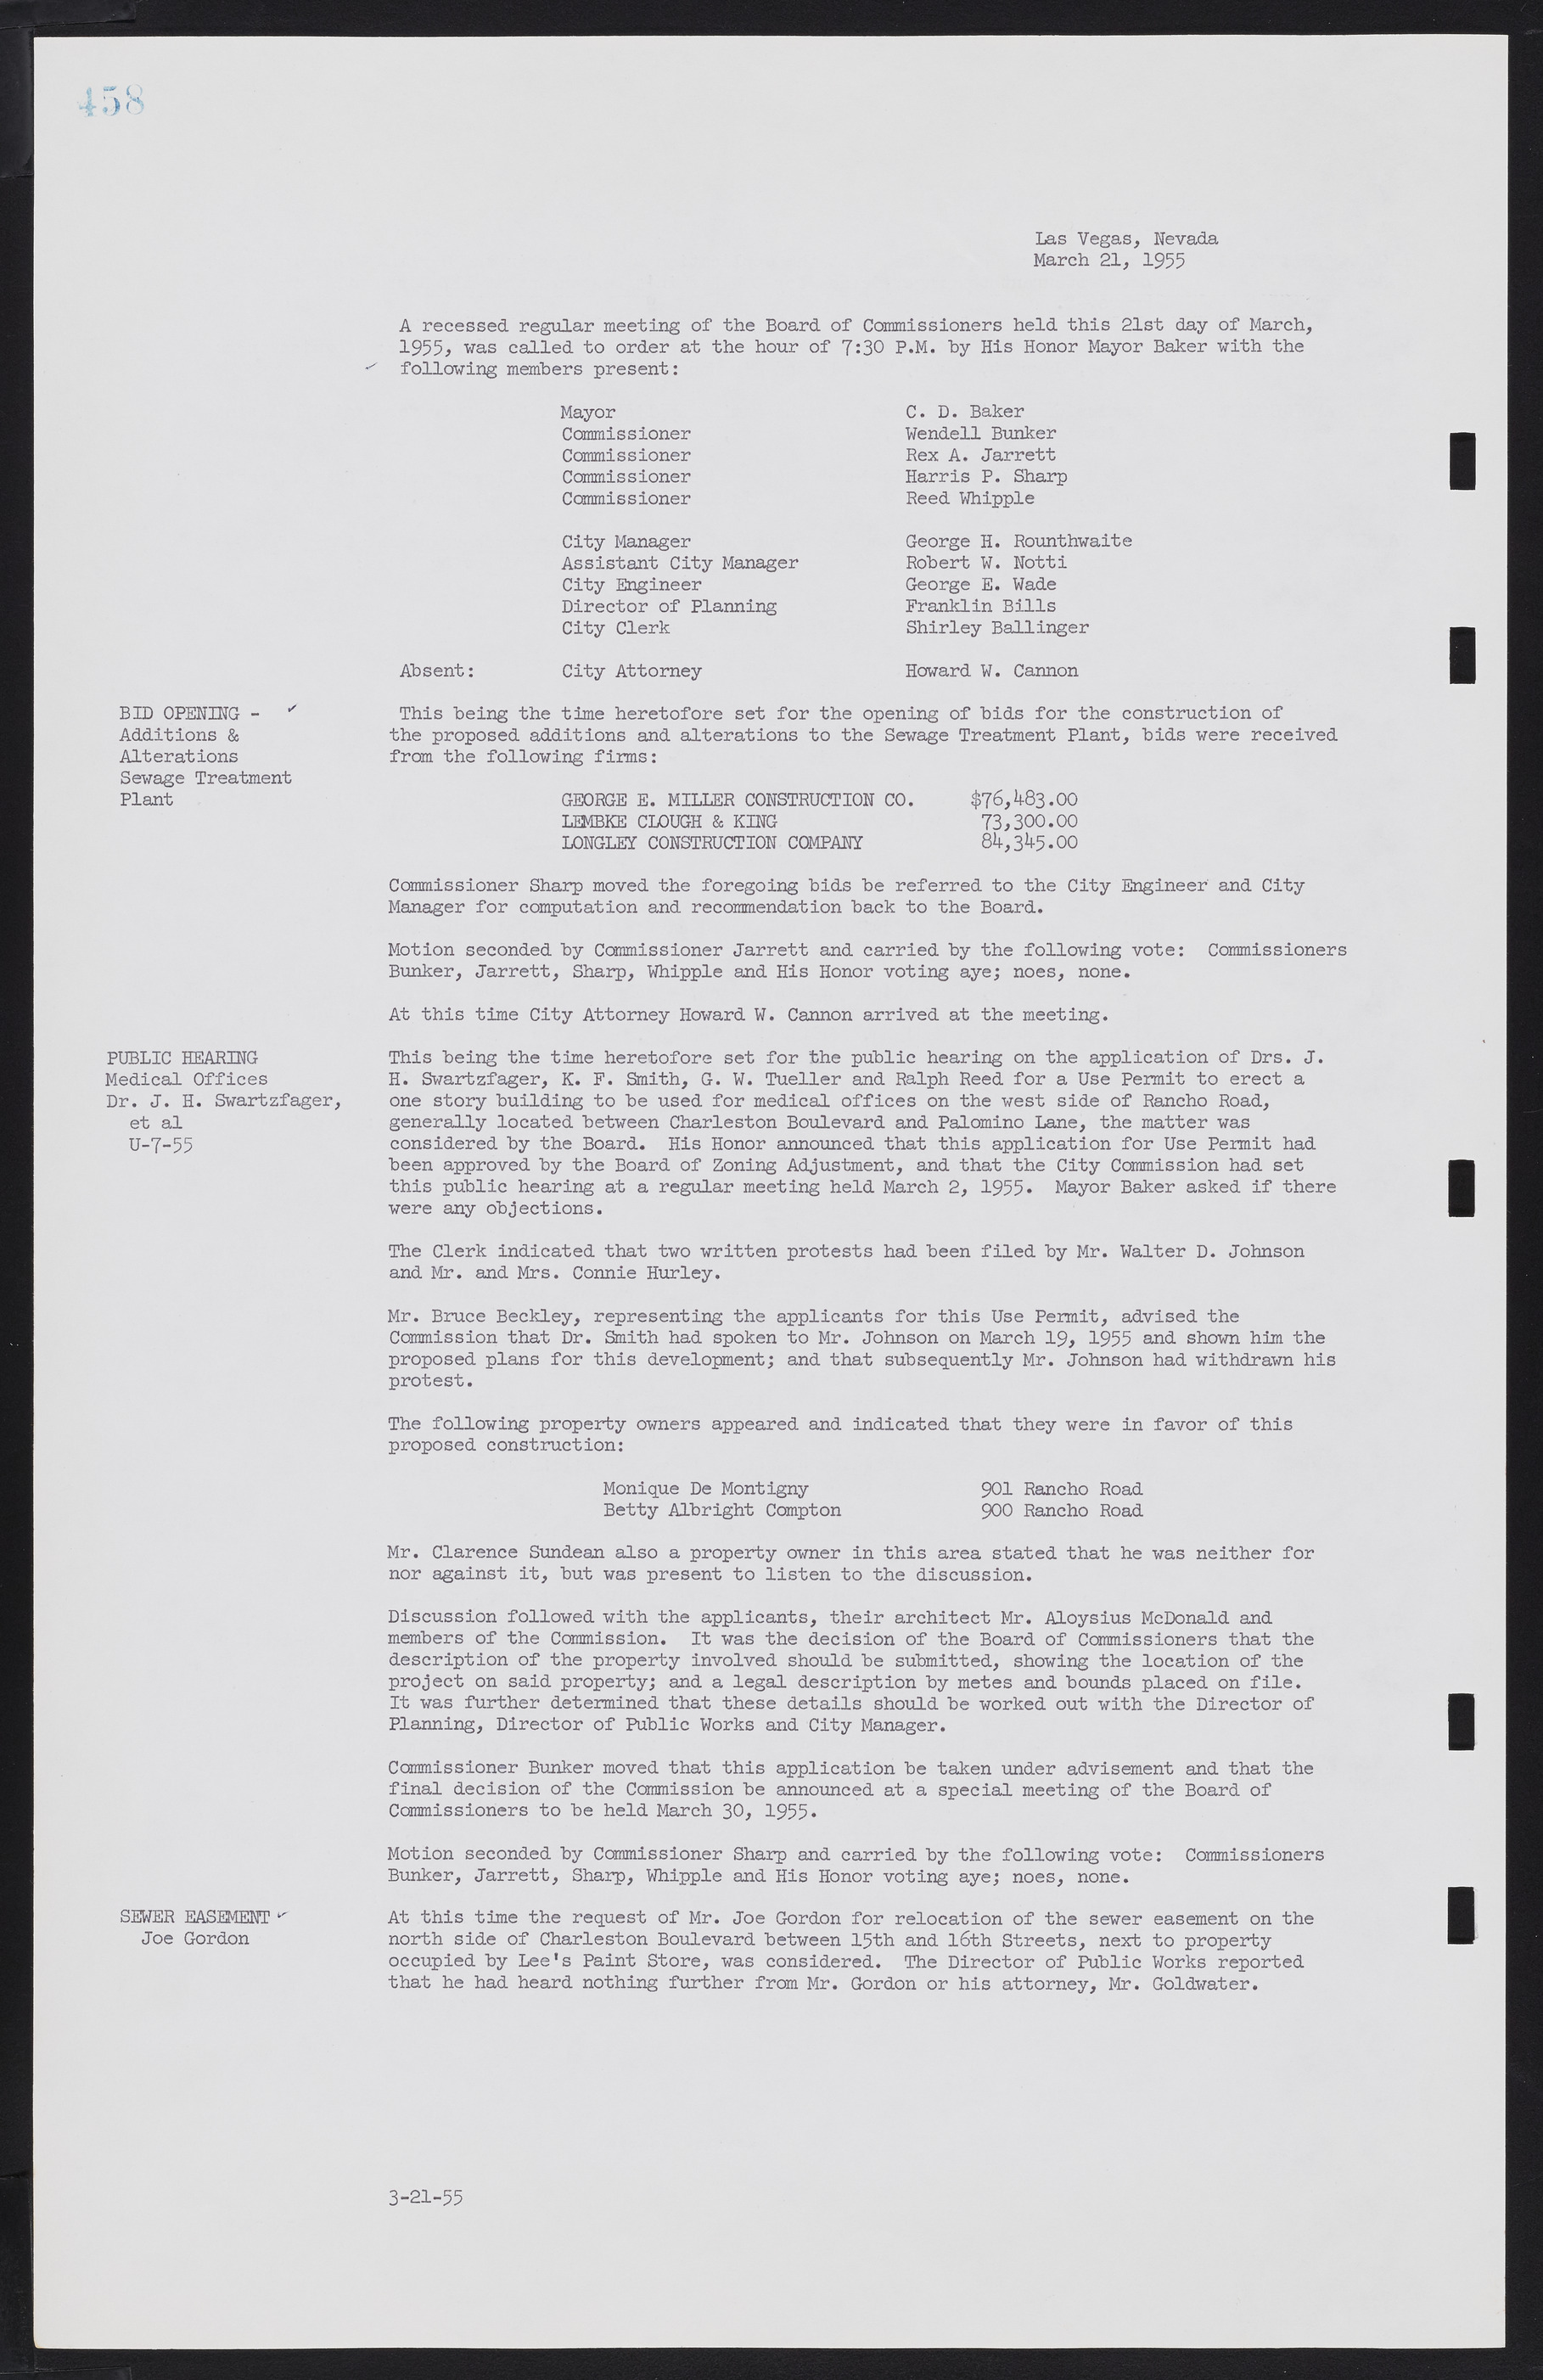 Las Vegas City Commission Minutes, February 17, 1954 to September 21, 1955, lvc000009-464